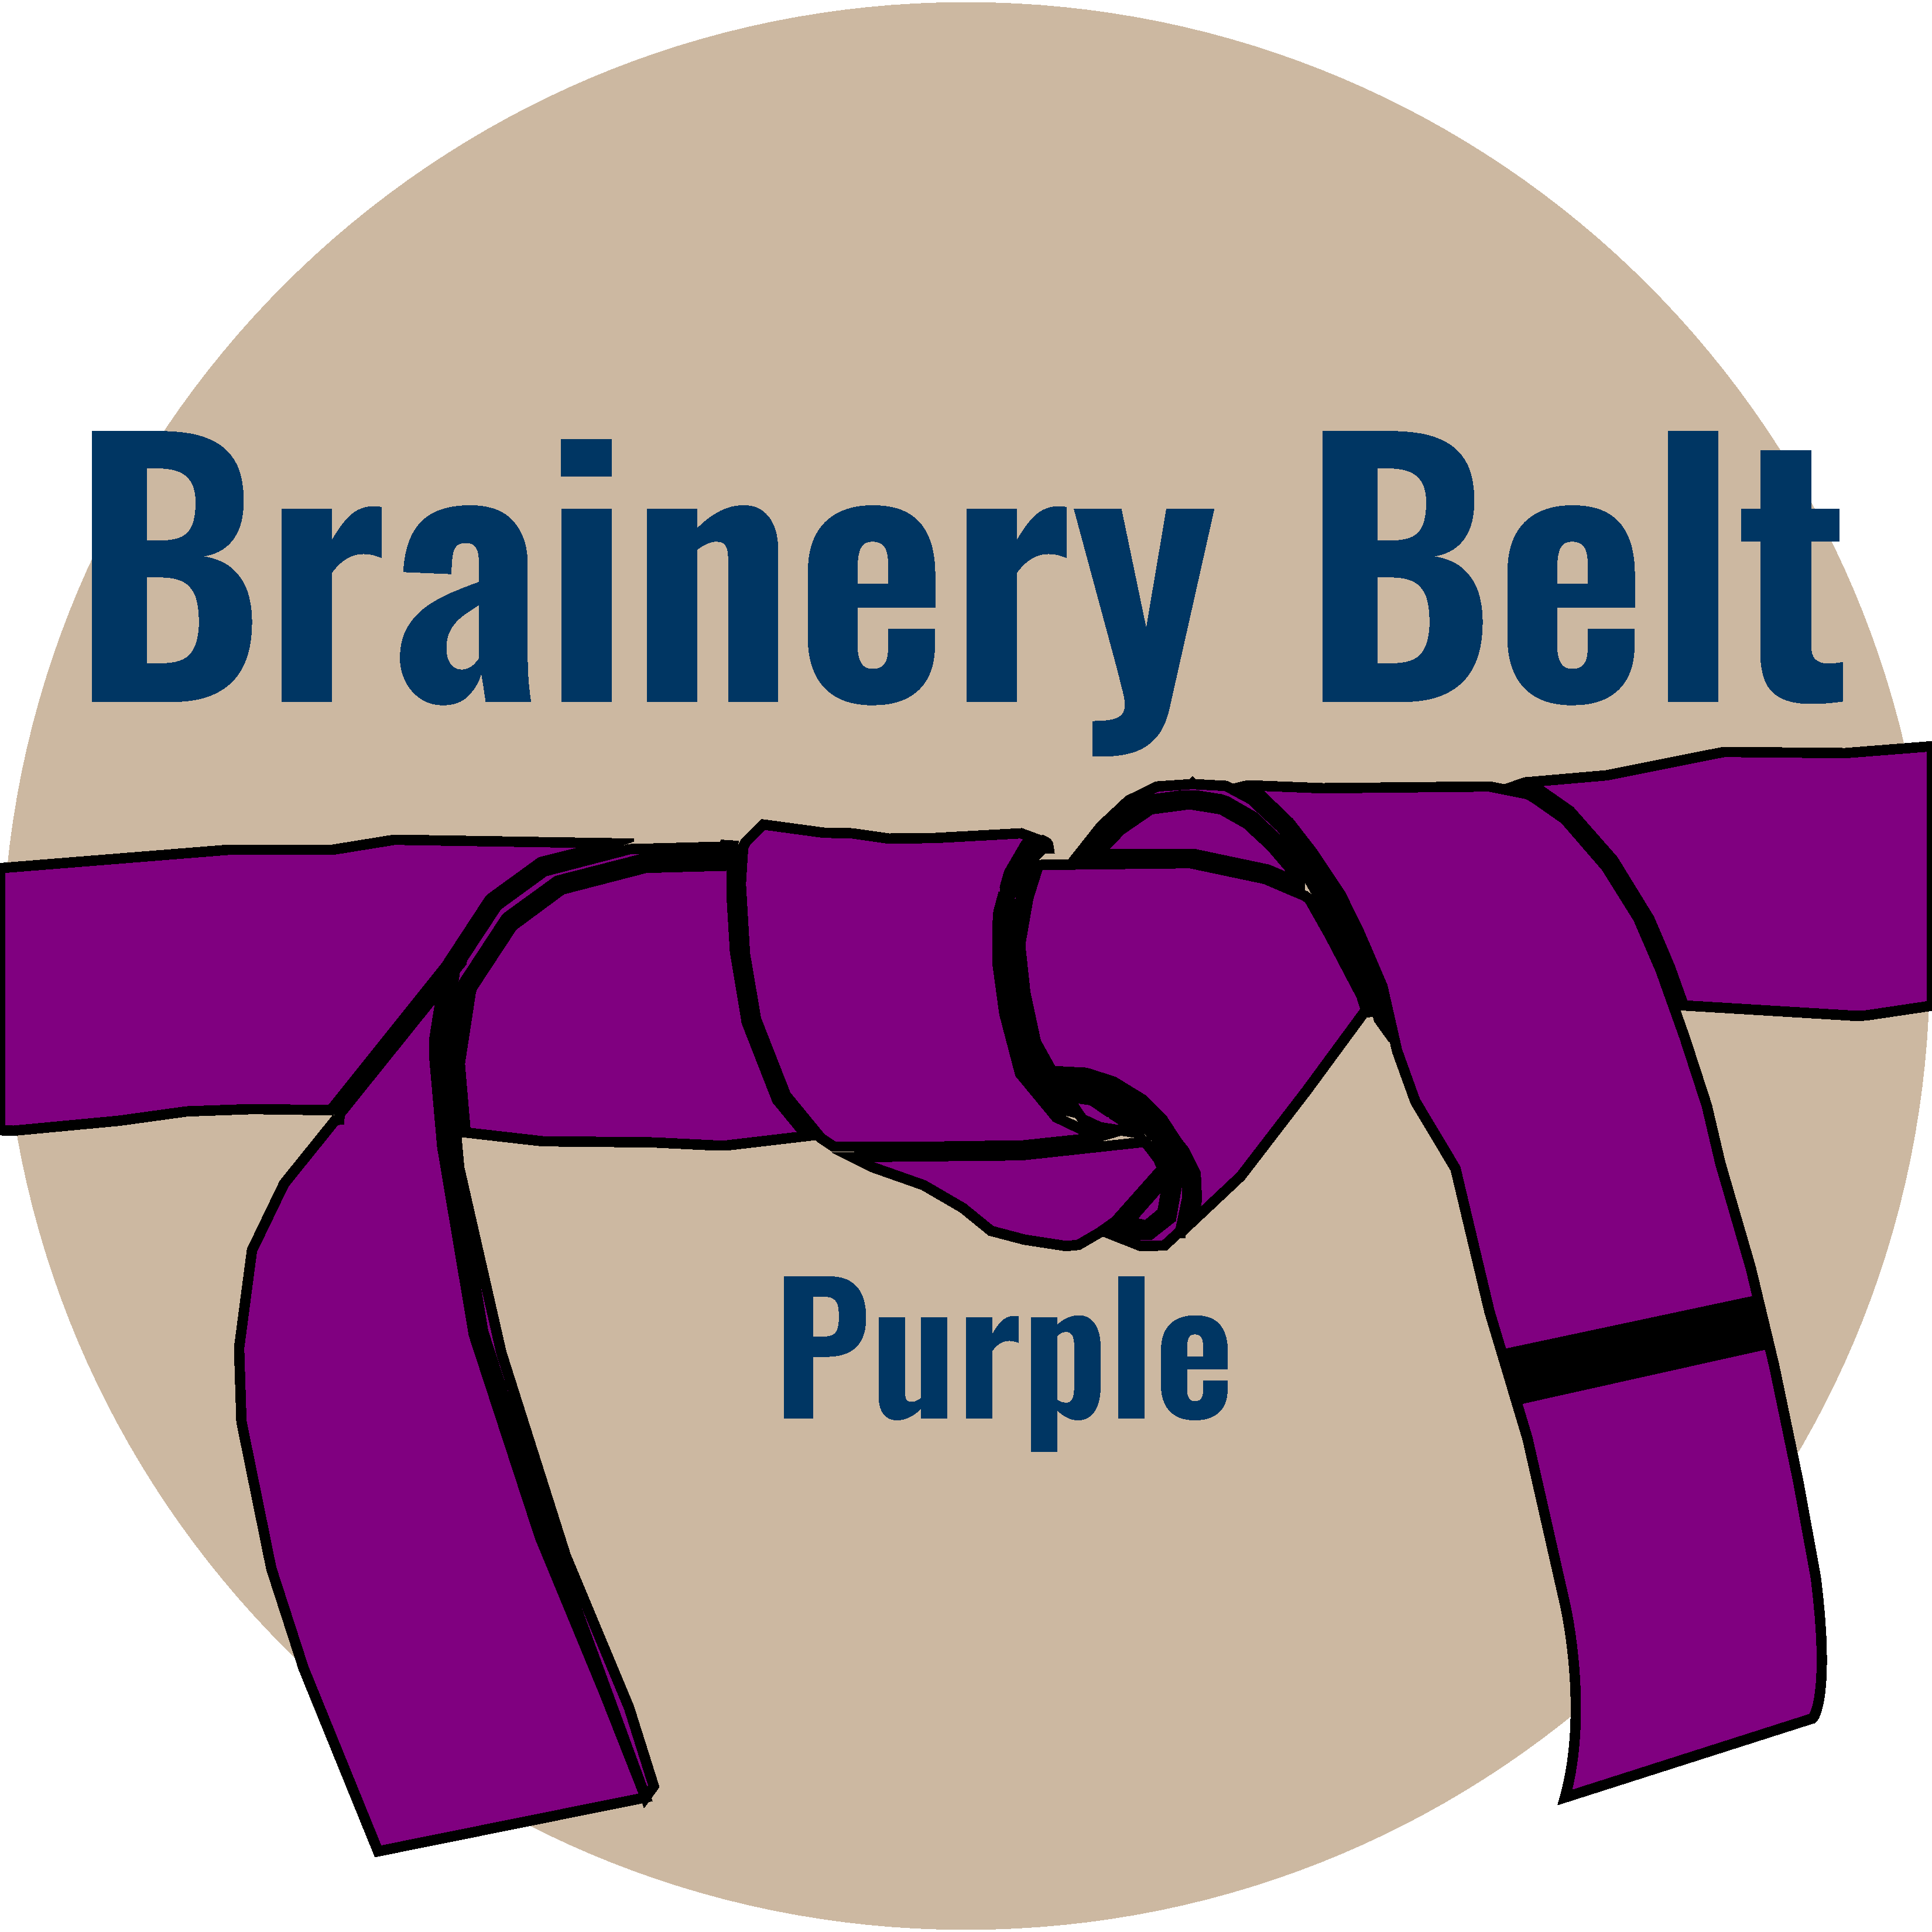 UC2 Brainery Purple Belt I